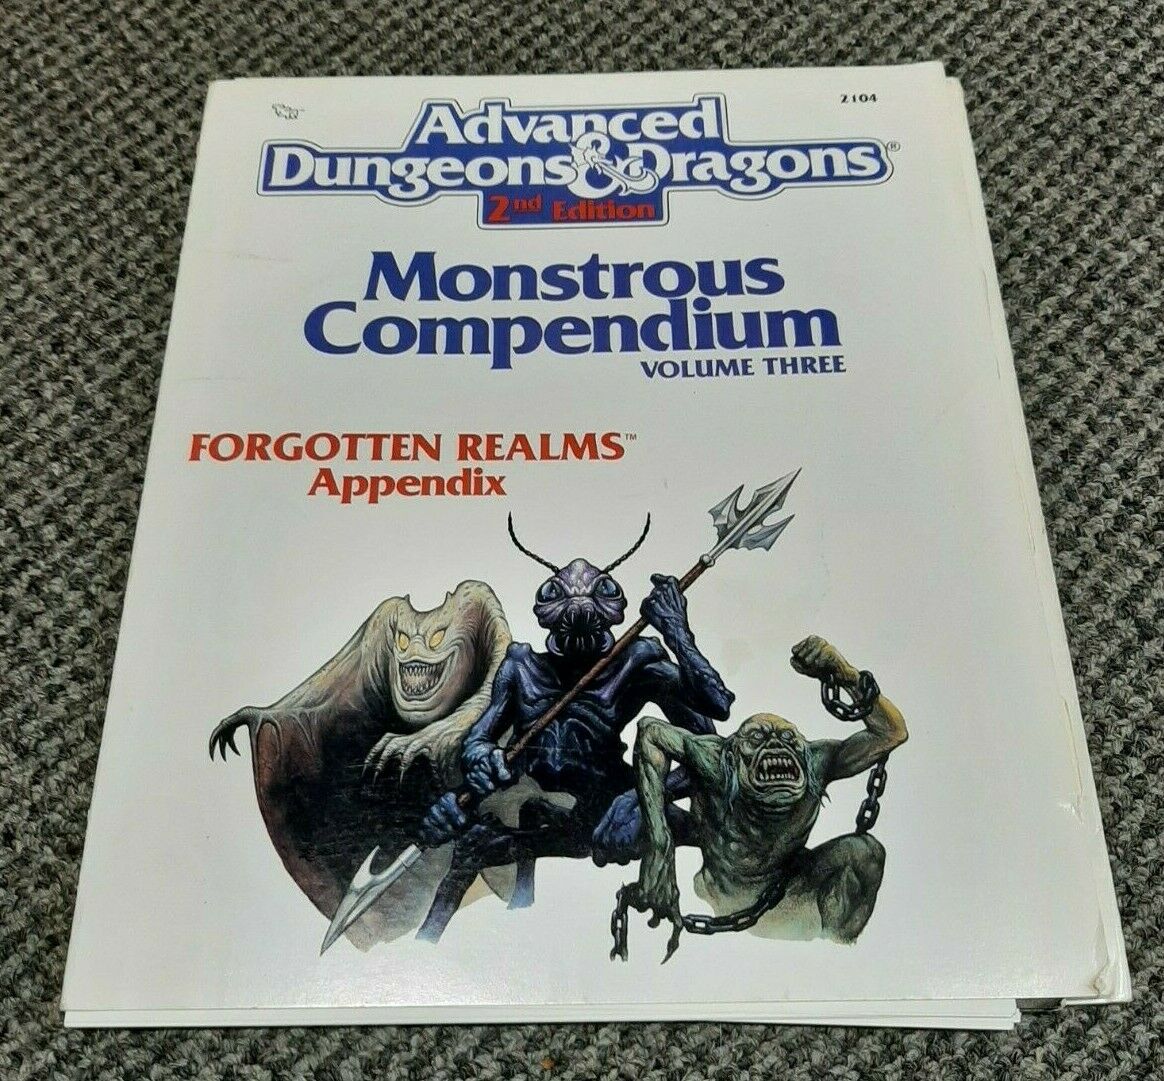 Monstrous Compendium Volume Three Forgotten Realms - Tsr 2104 Dungeons Dragons